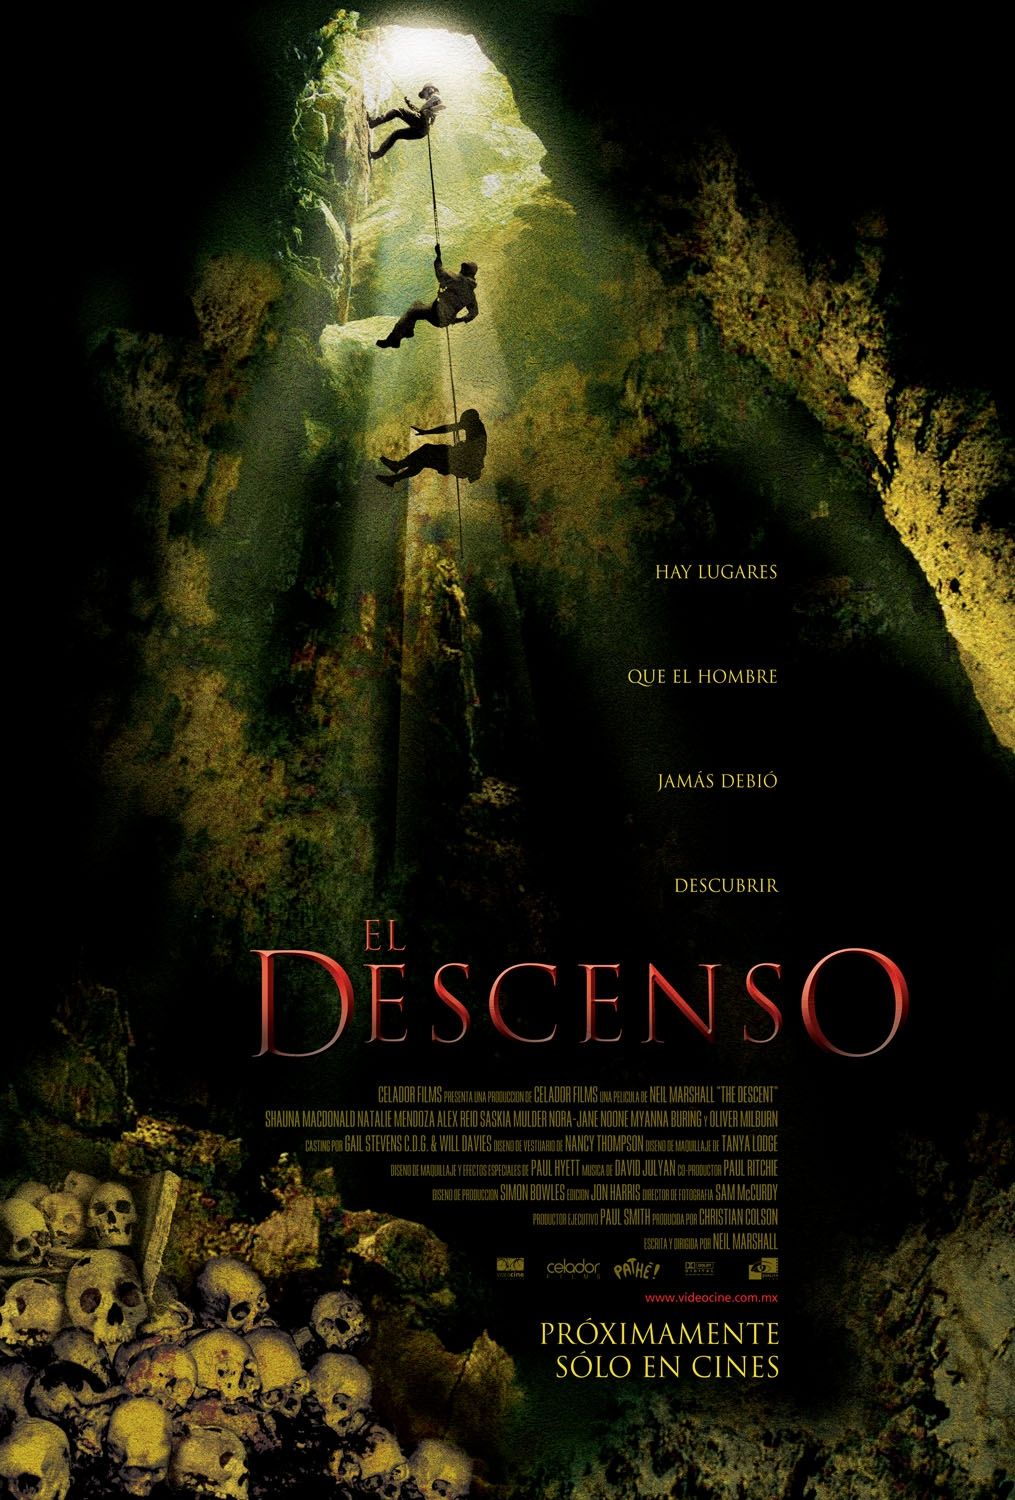 the descent 3 full movie